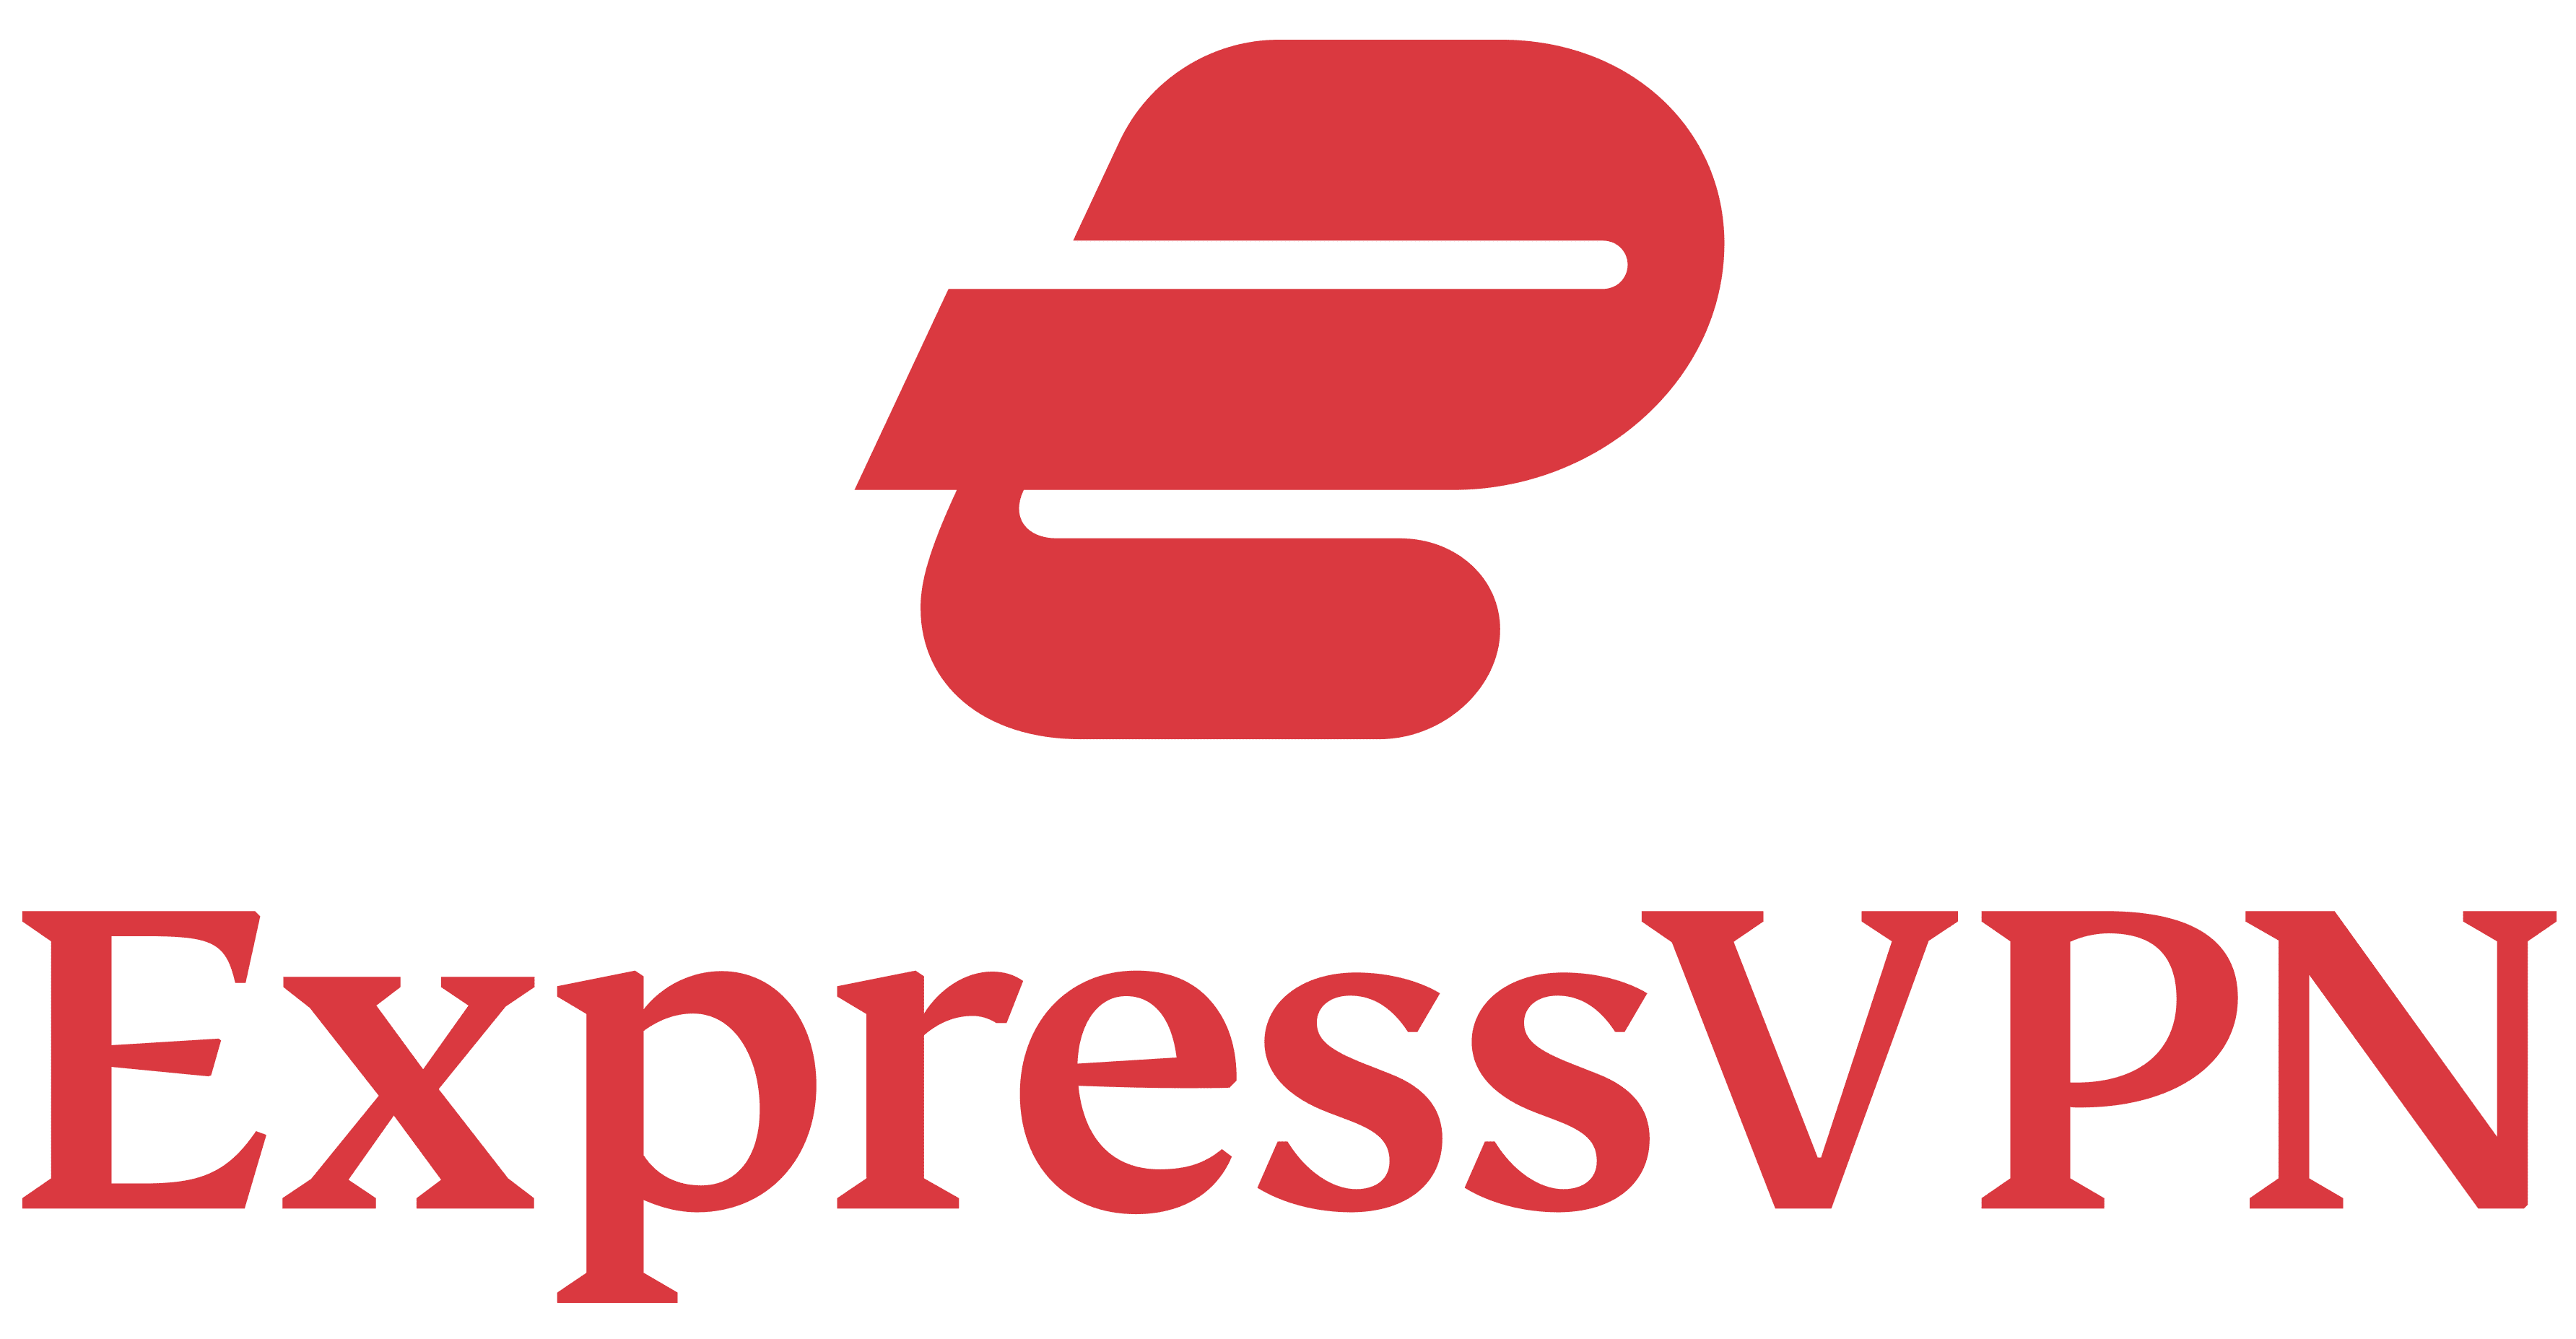 Expressvpn-logo